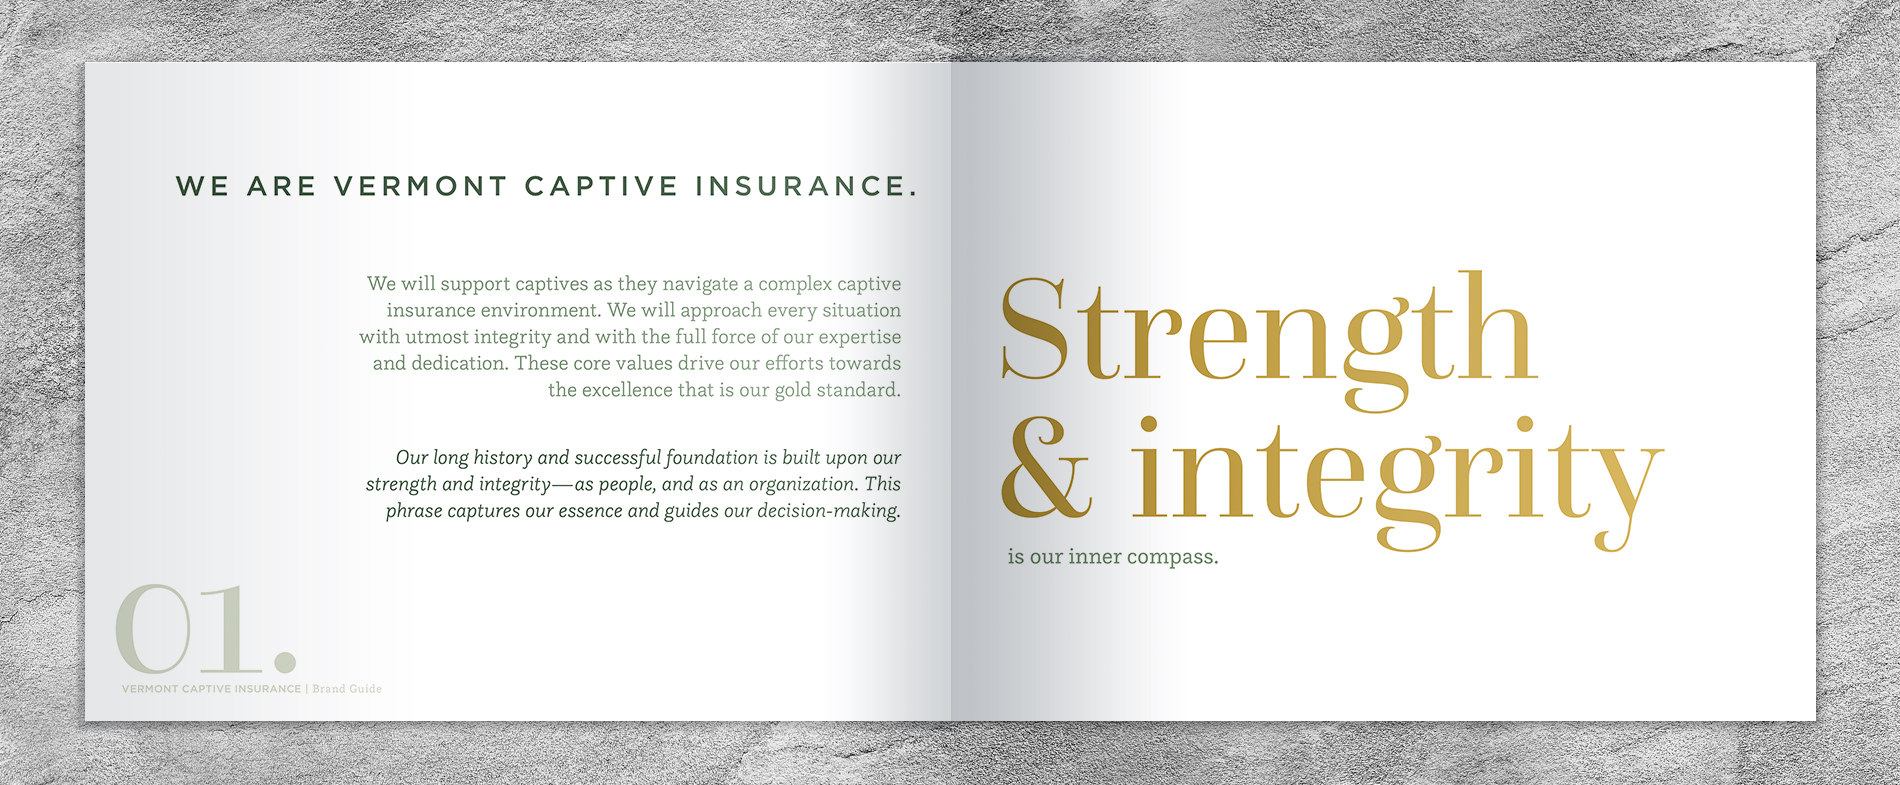 Brand identity book designBrand identity book design for Vermont Captive Insurance